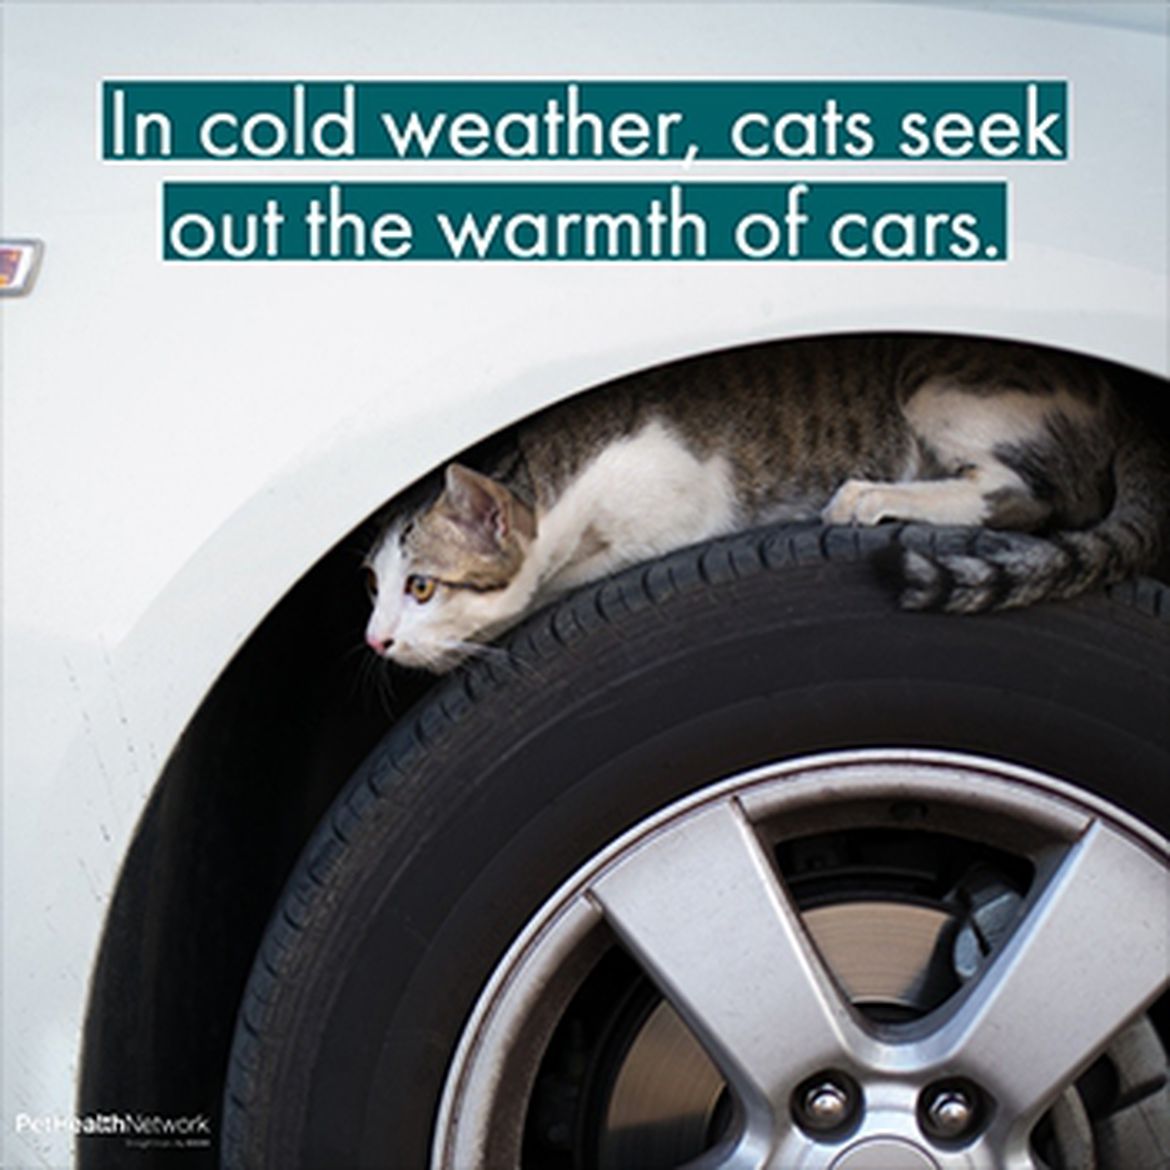 Cat sleeping on a car's tire.